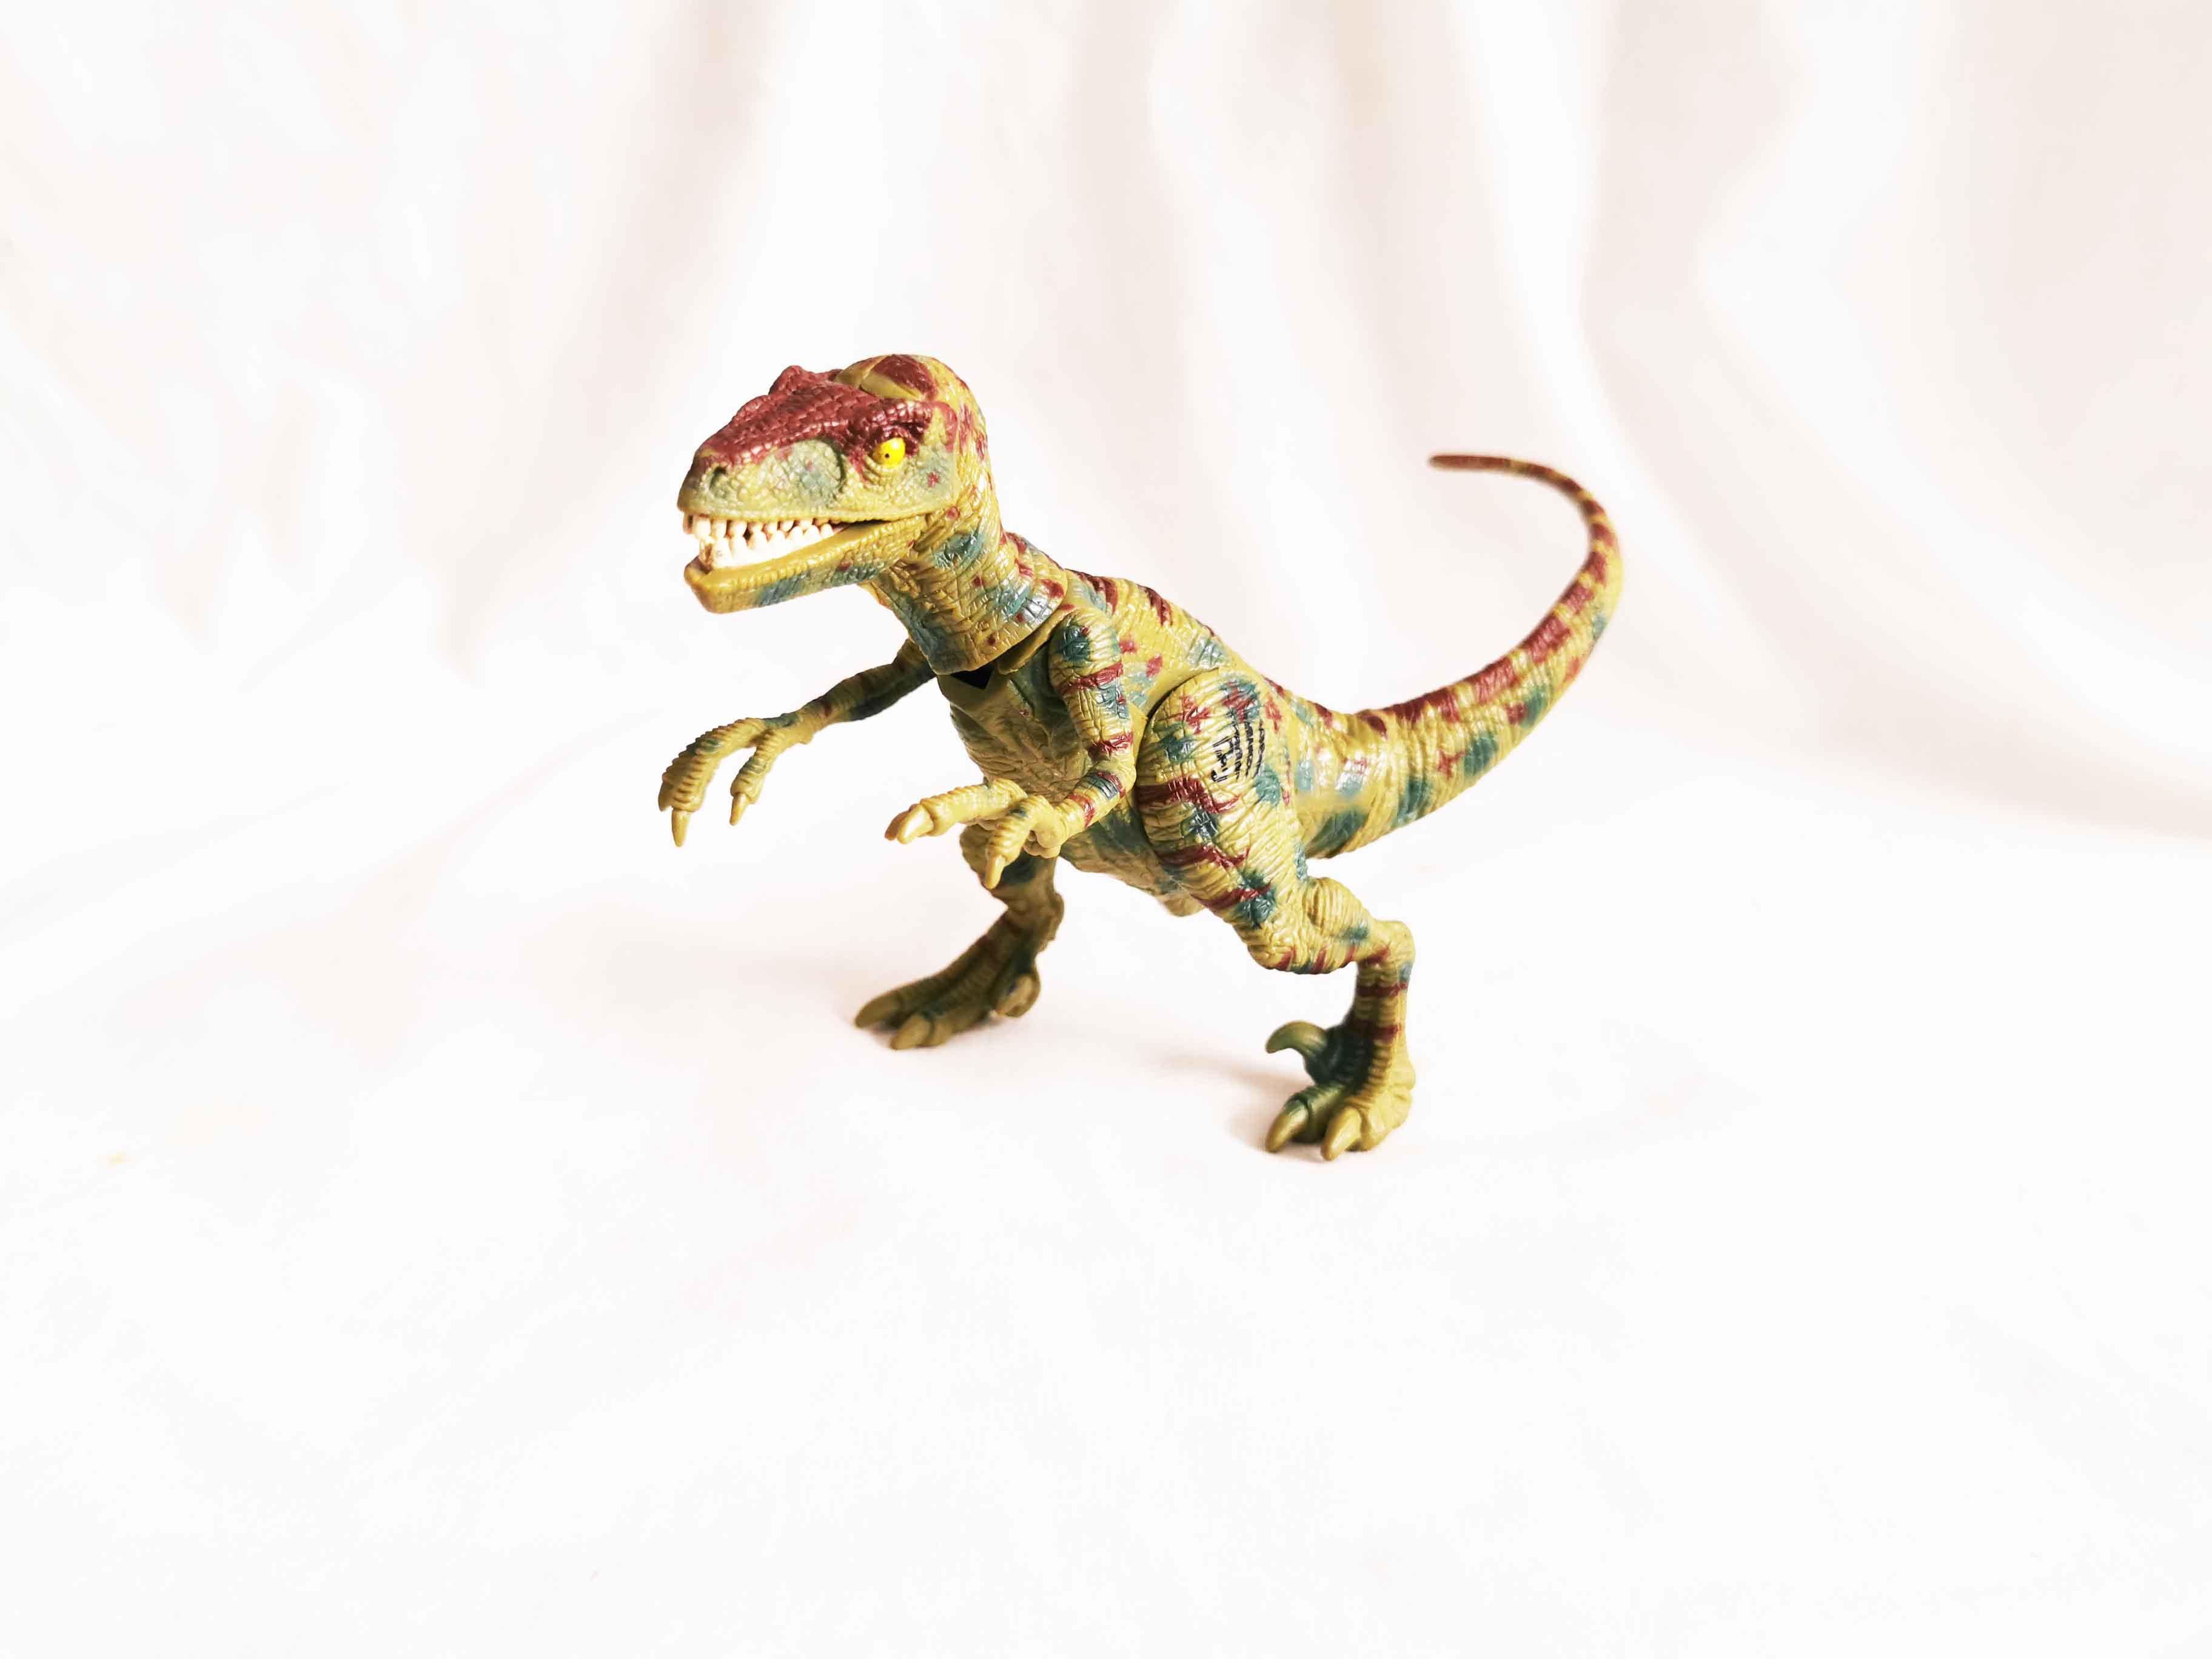 Jurassic Park 3 Raptor Velociraptor Action Figure Green battle damage version